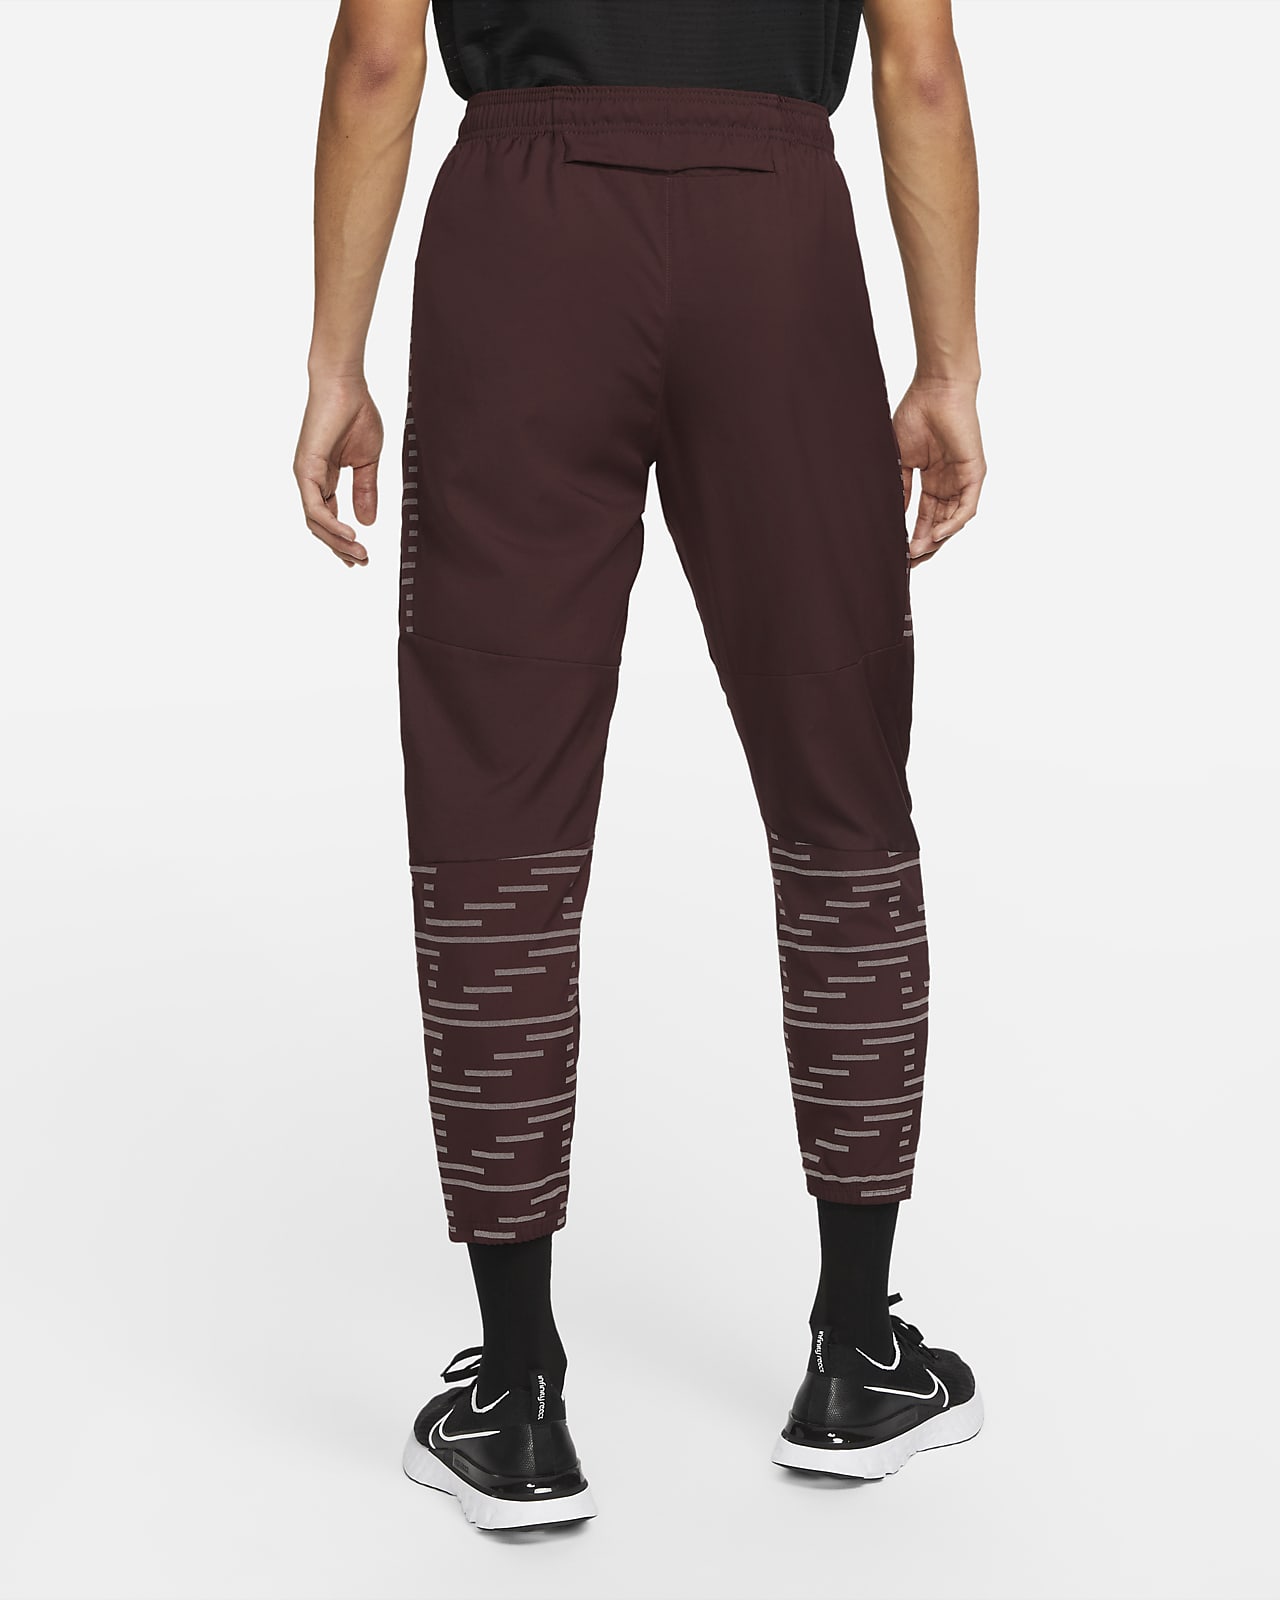 Nike PHENOM ELITE KNIT Mens Running Trousers Pants Black CV7437 010  eBay